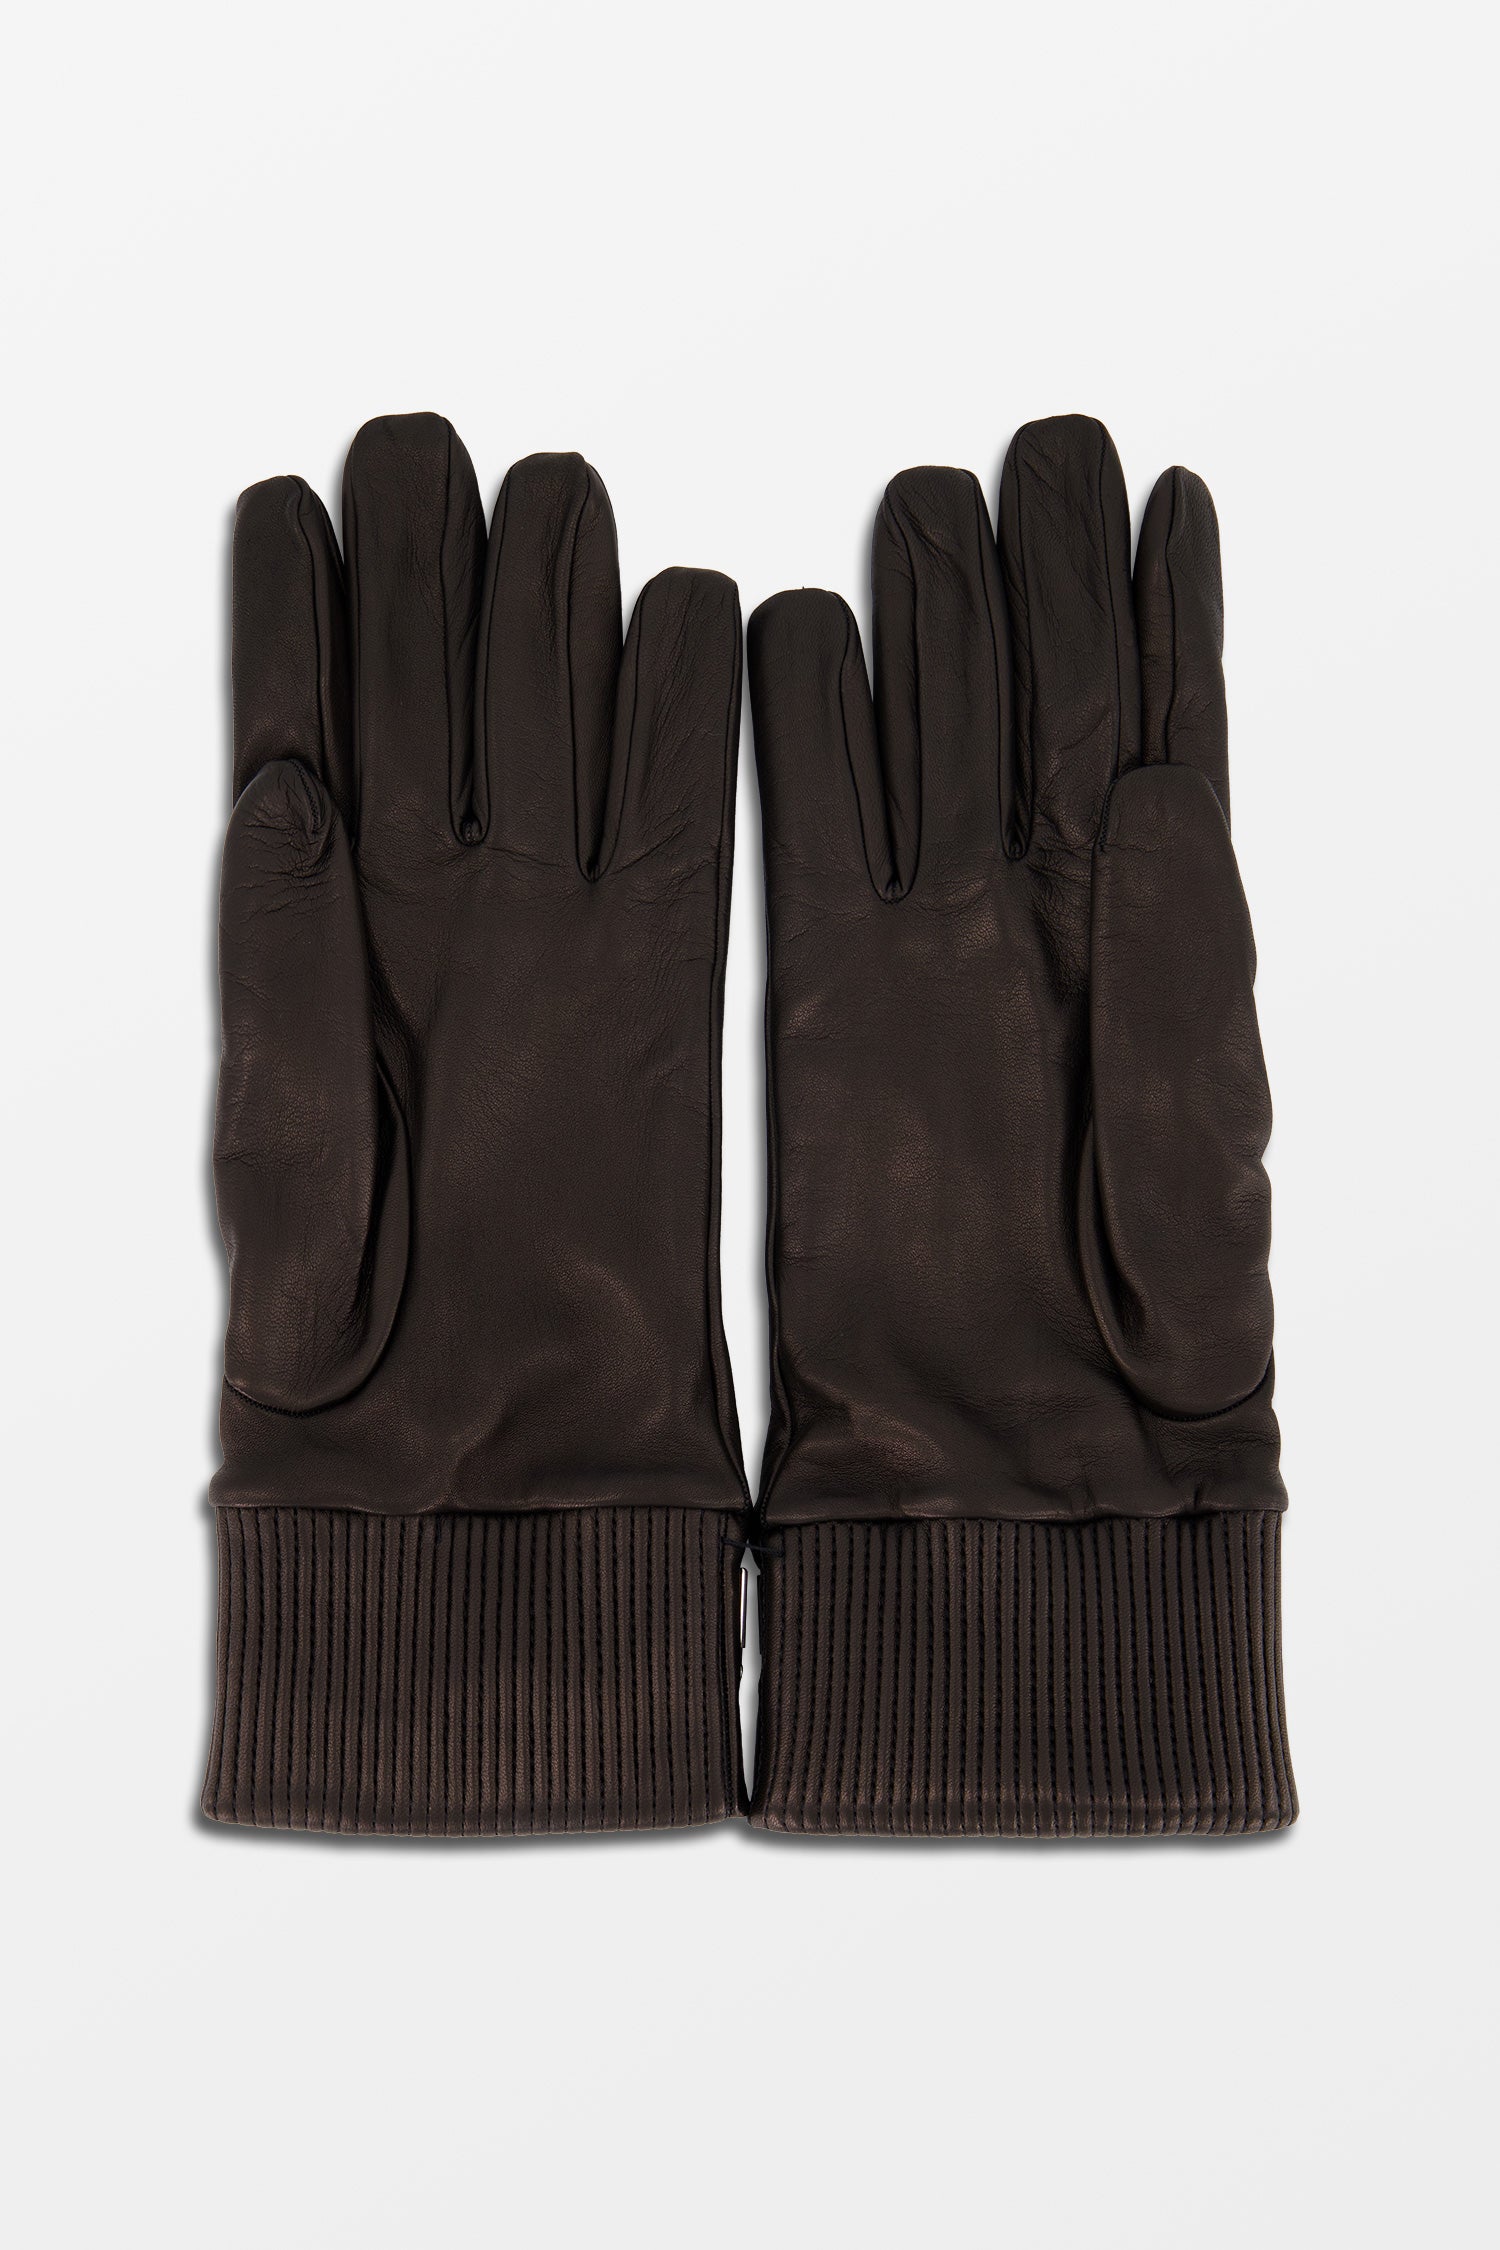 Zilli Leather Black Gloves